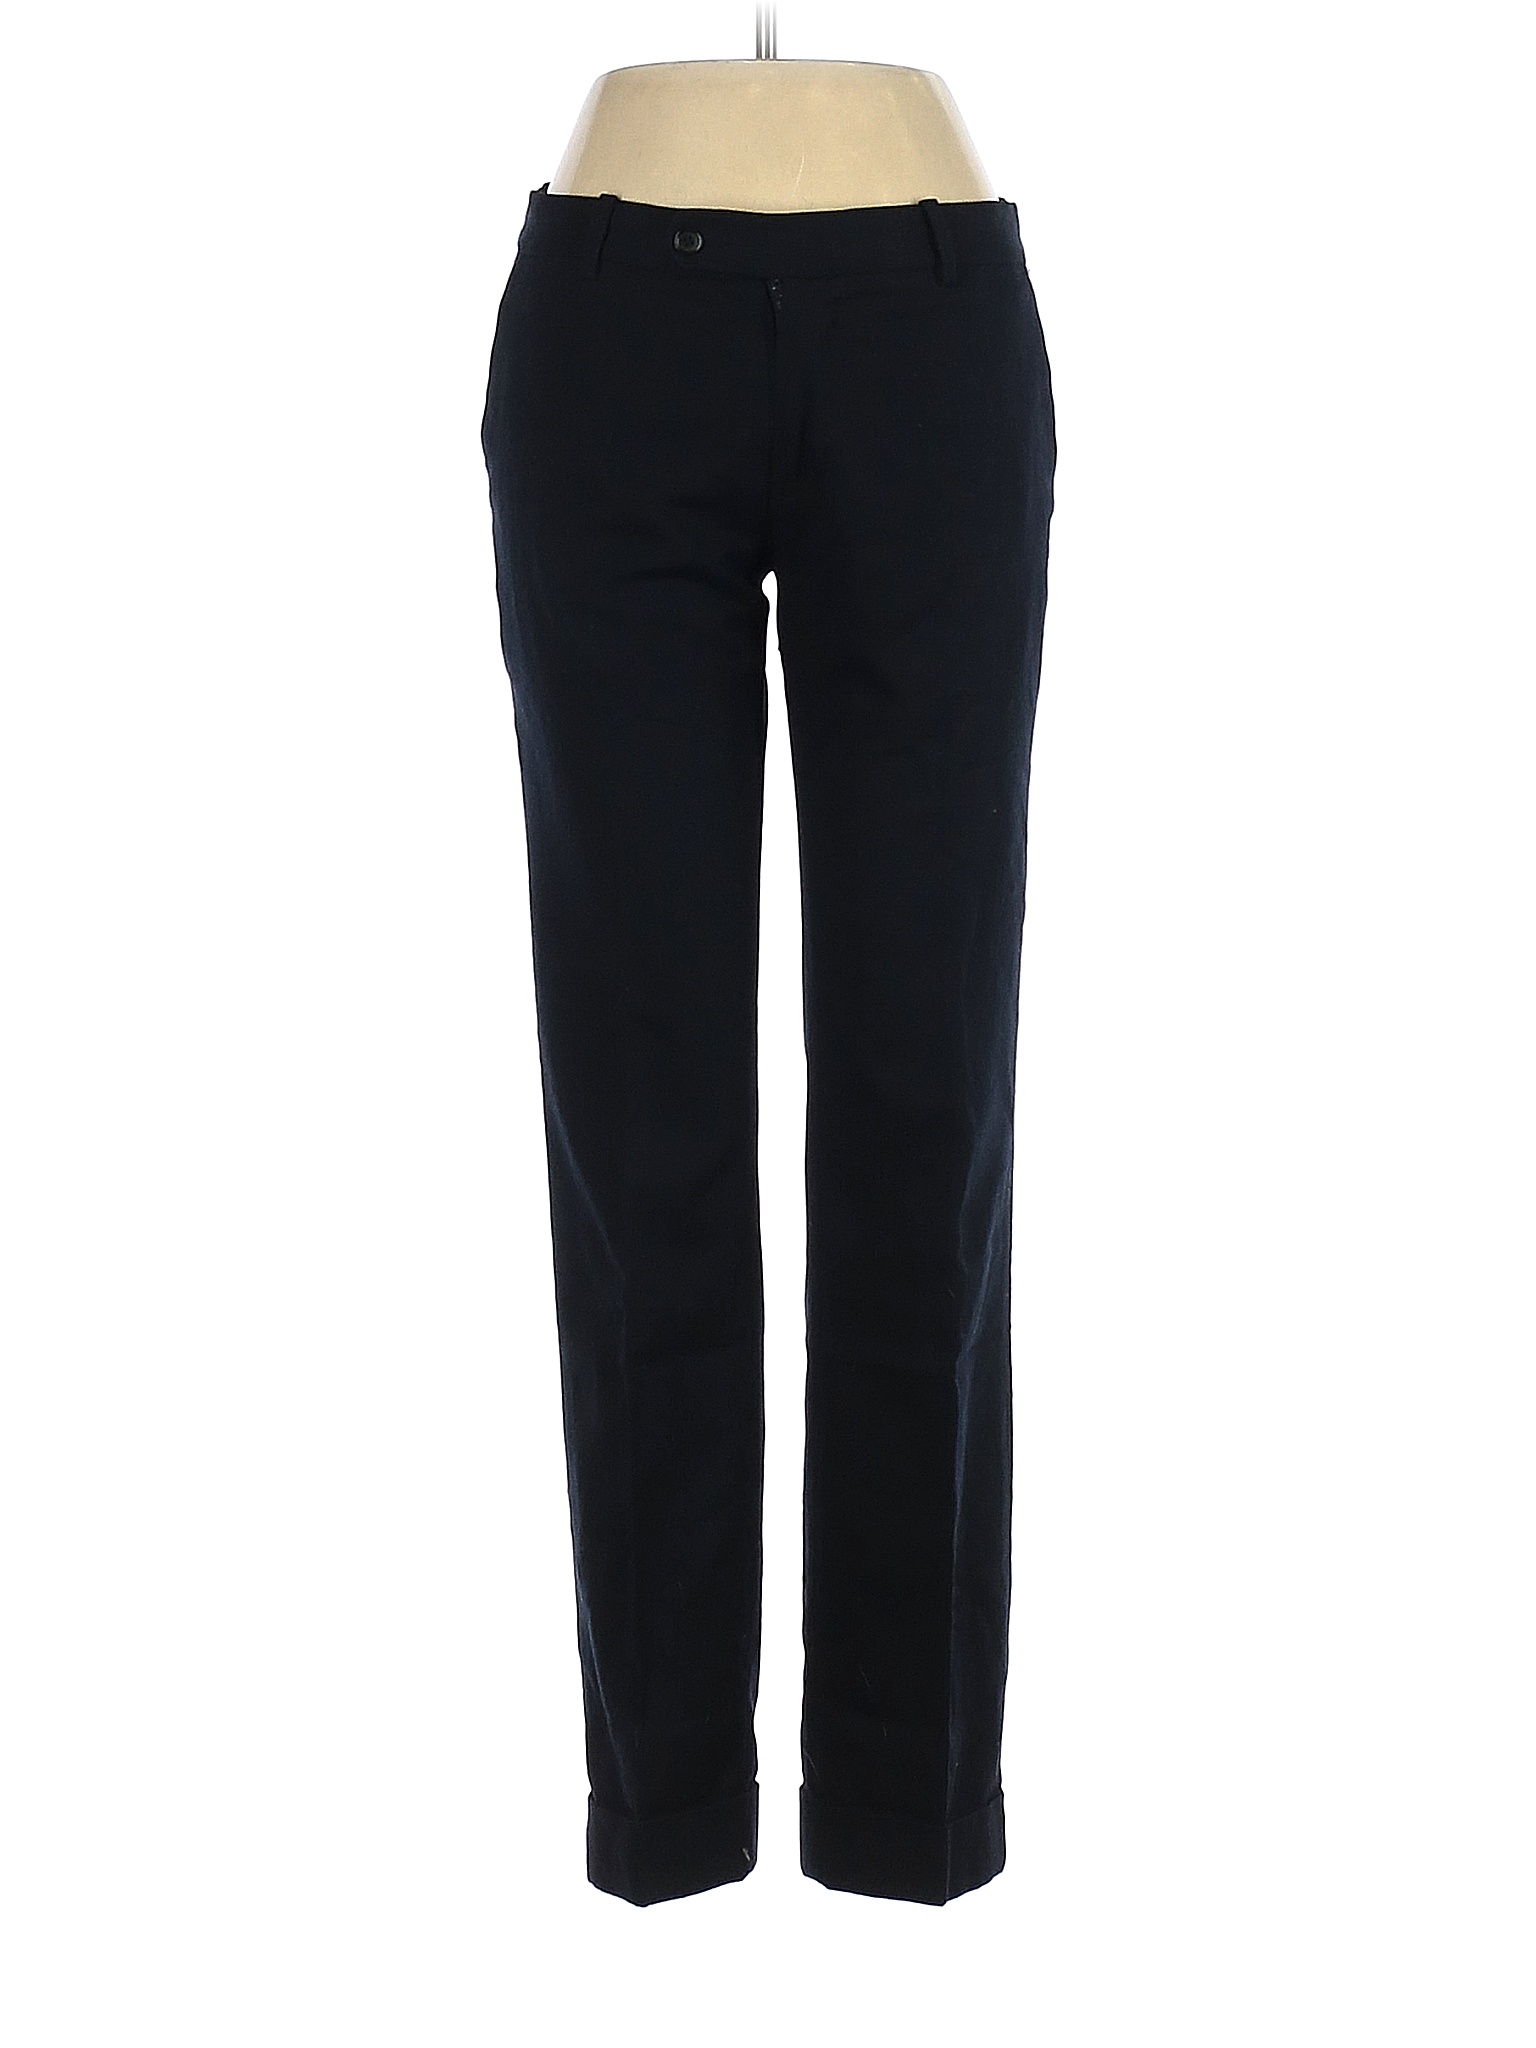 Uniqlo Solid Black Blue Dress Pants Size 0 - 70% off | thredUP